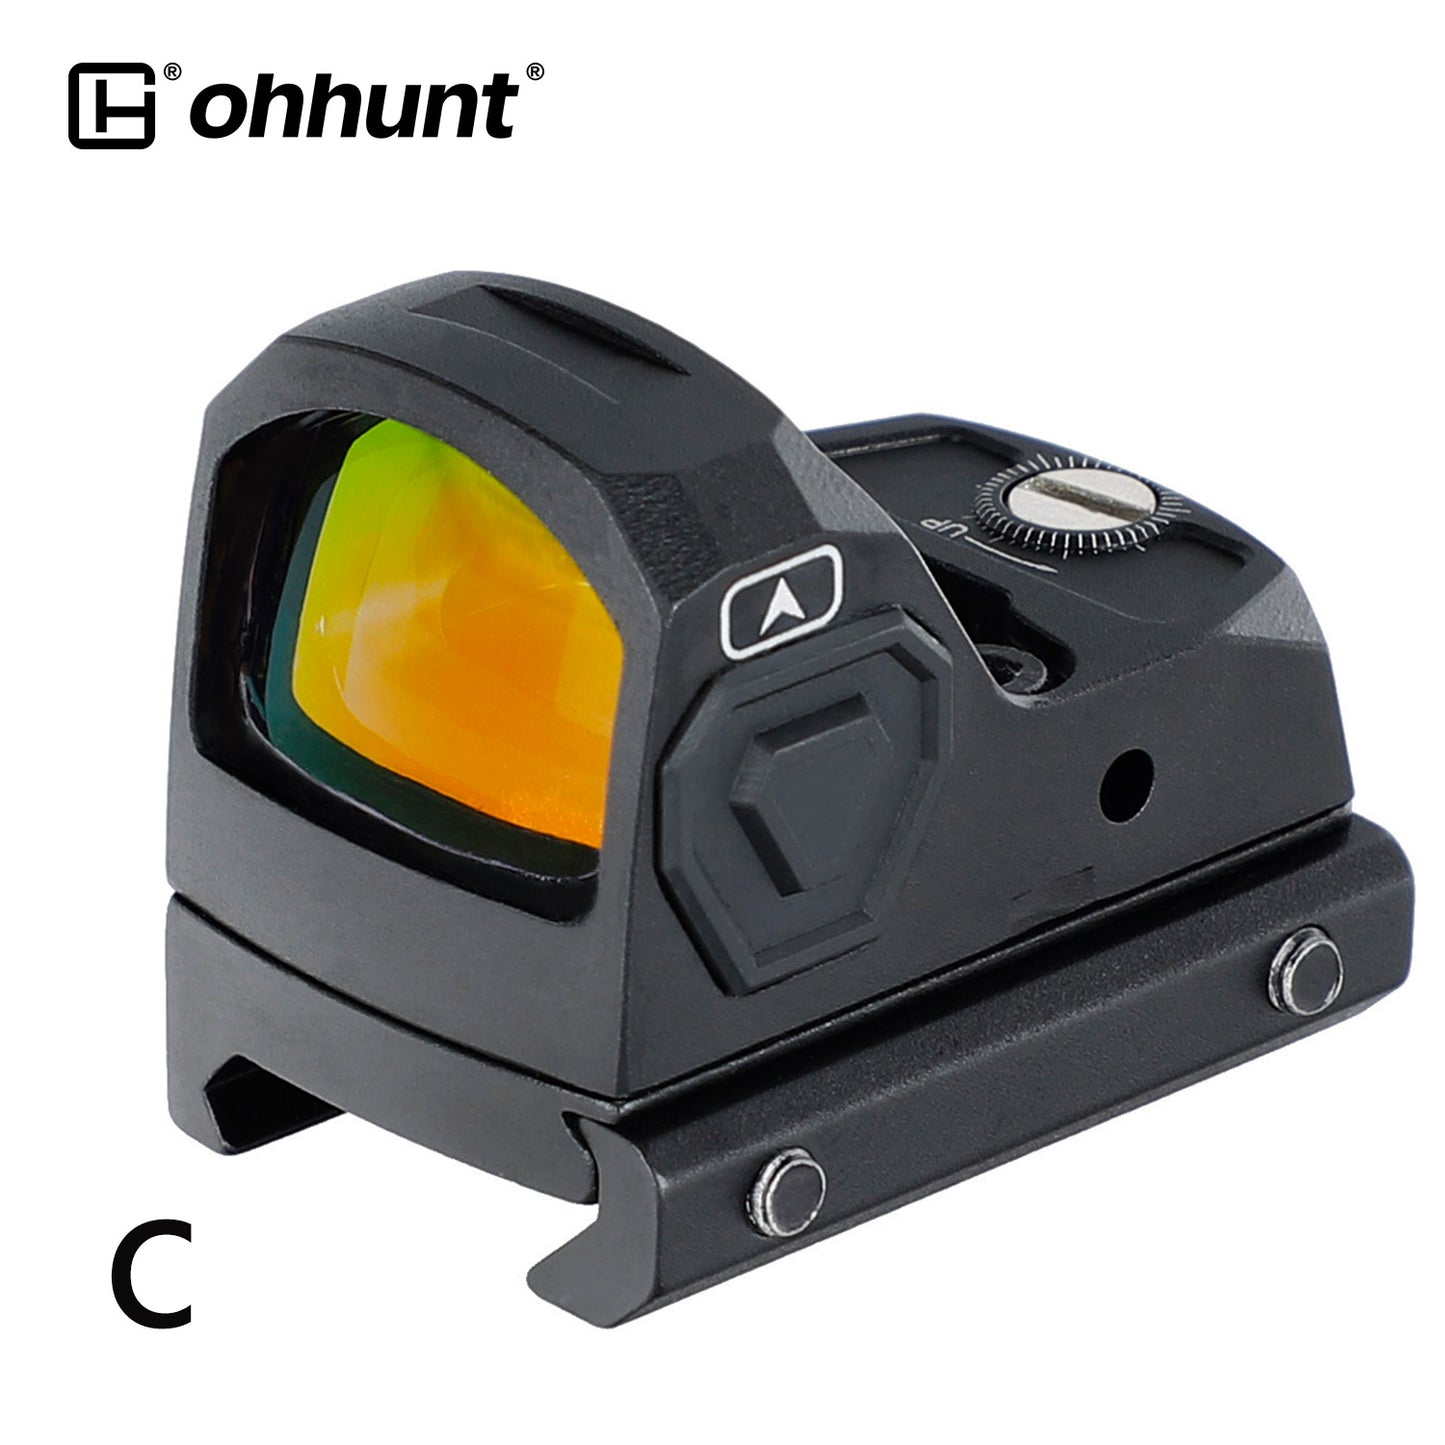 ohhunt® 2 MOA Shake Awake Micro Red Dot Sight 12x Illumination Settings RMR footprint with Pistol and Picatinny Mount